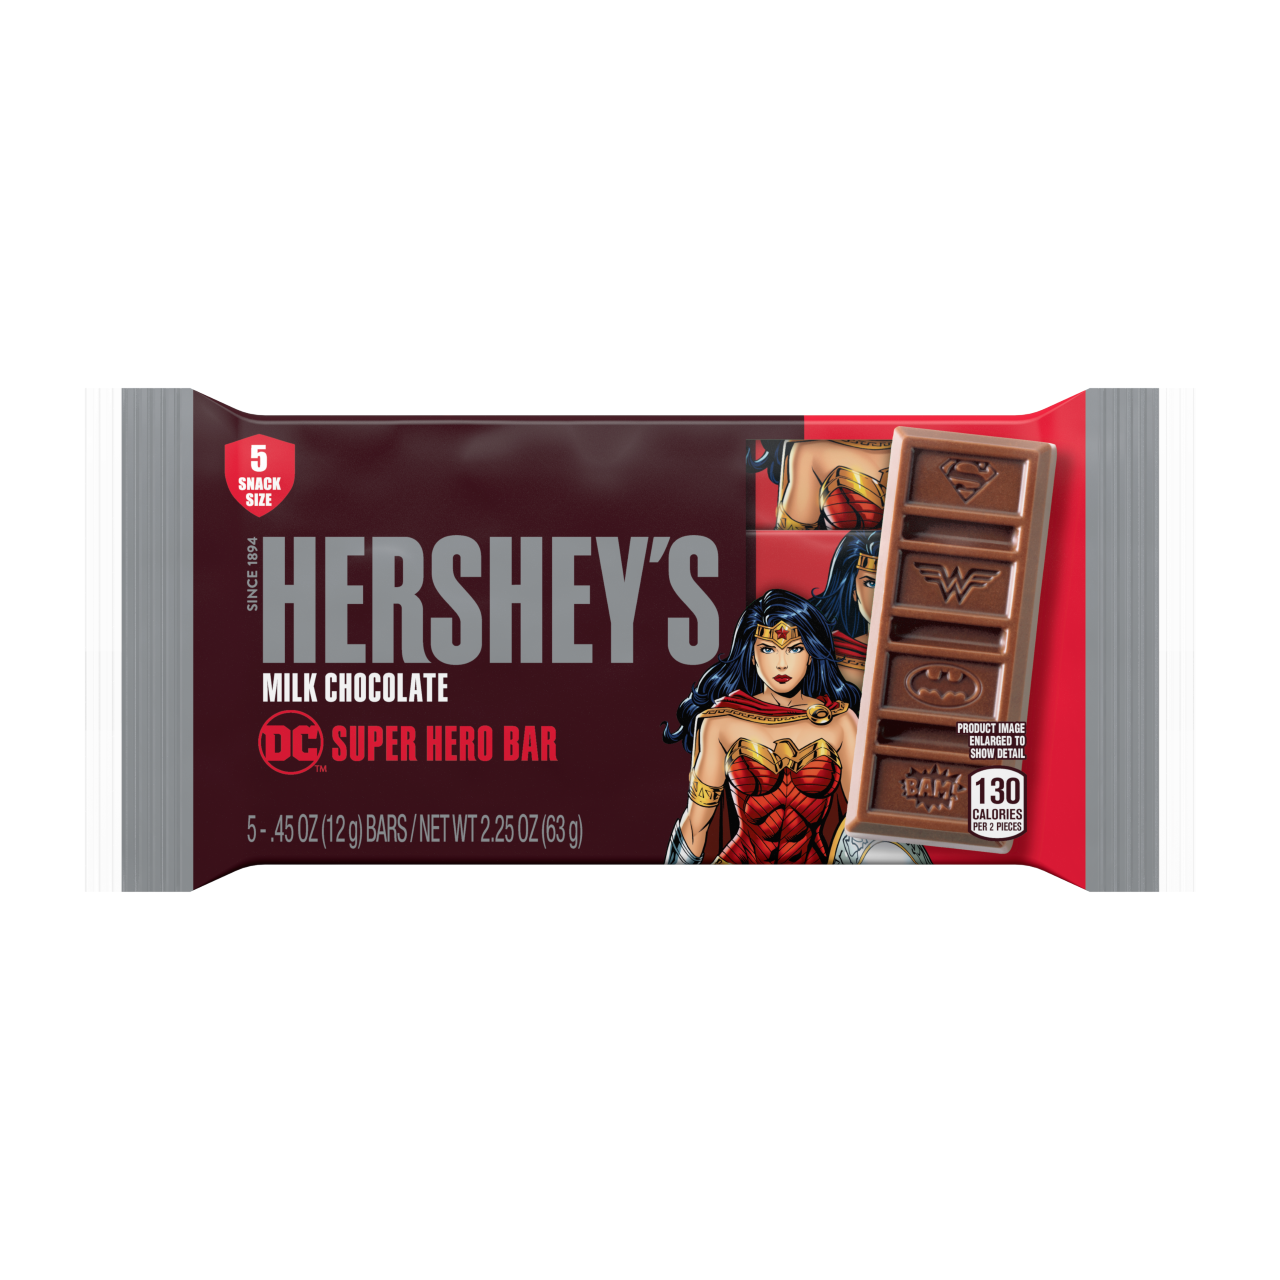 Hershey's Gave Frontline Workers Its New Superhero Chocolate Bars